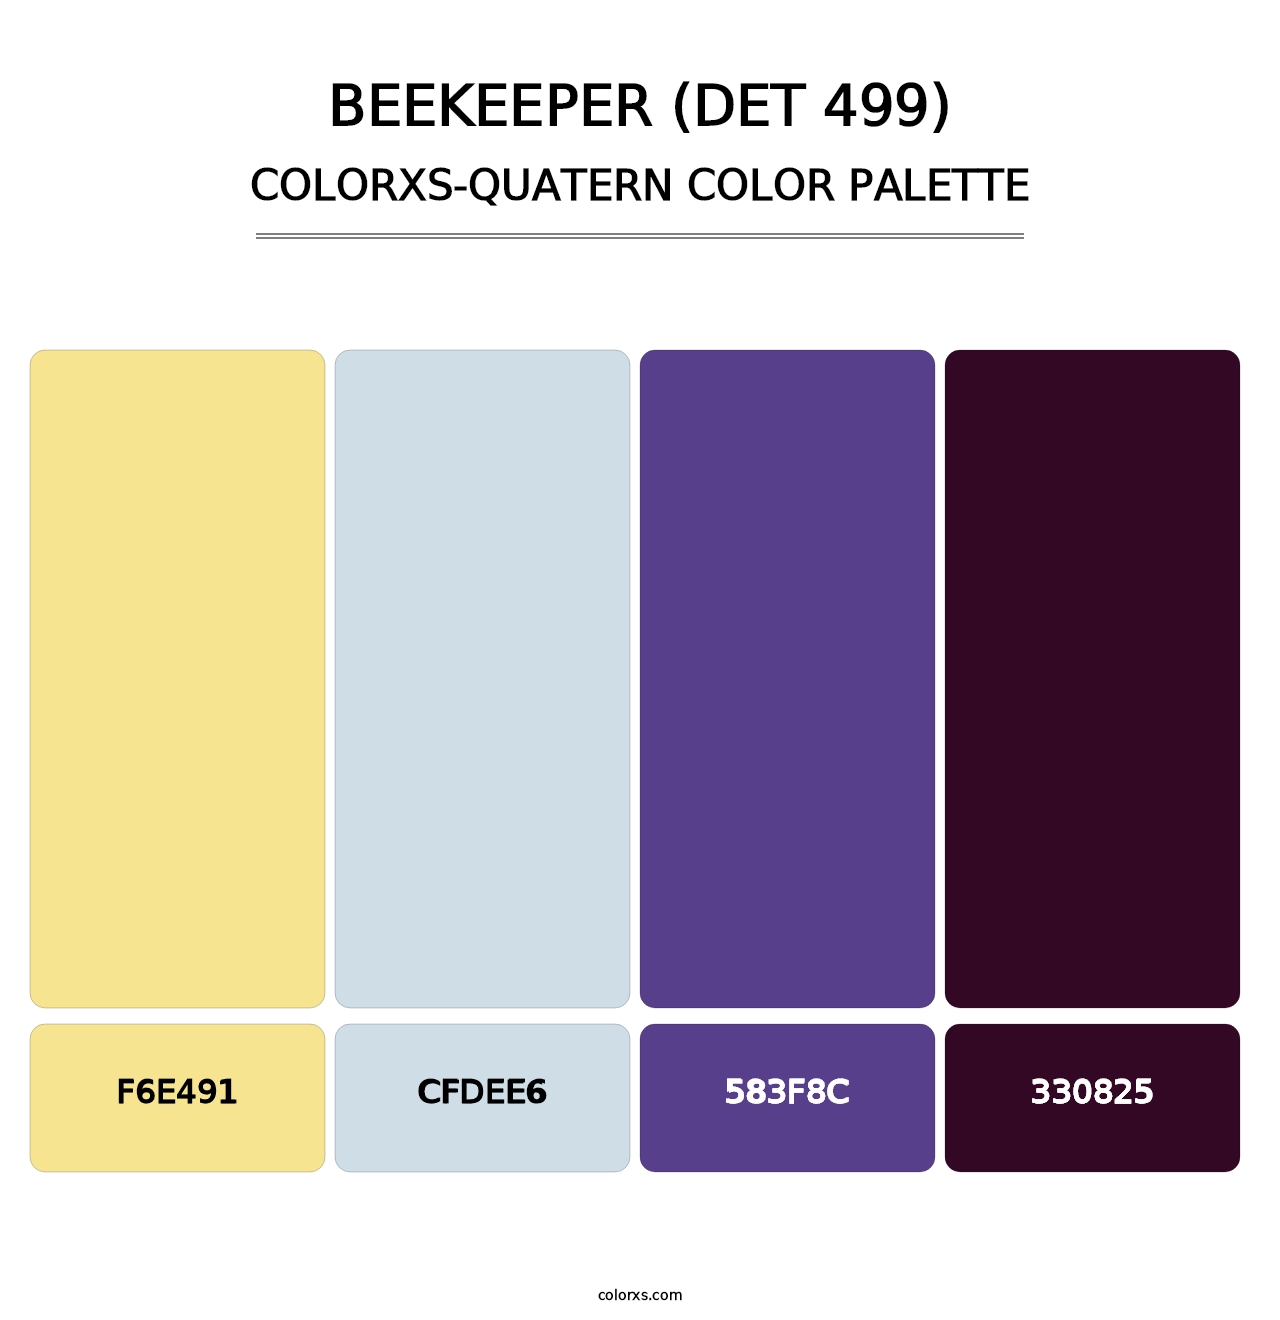 Beekeeper (DET 499) - Colorxs Quatern Palette